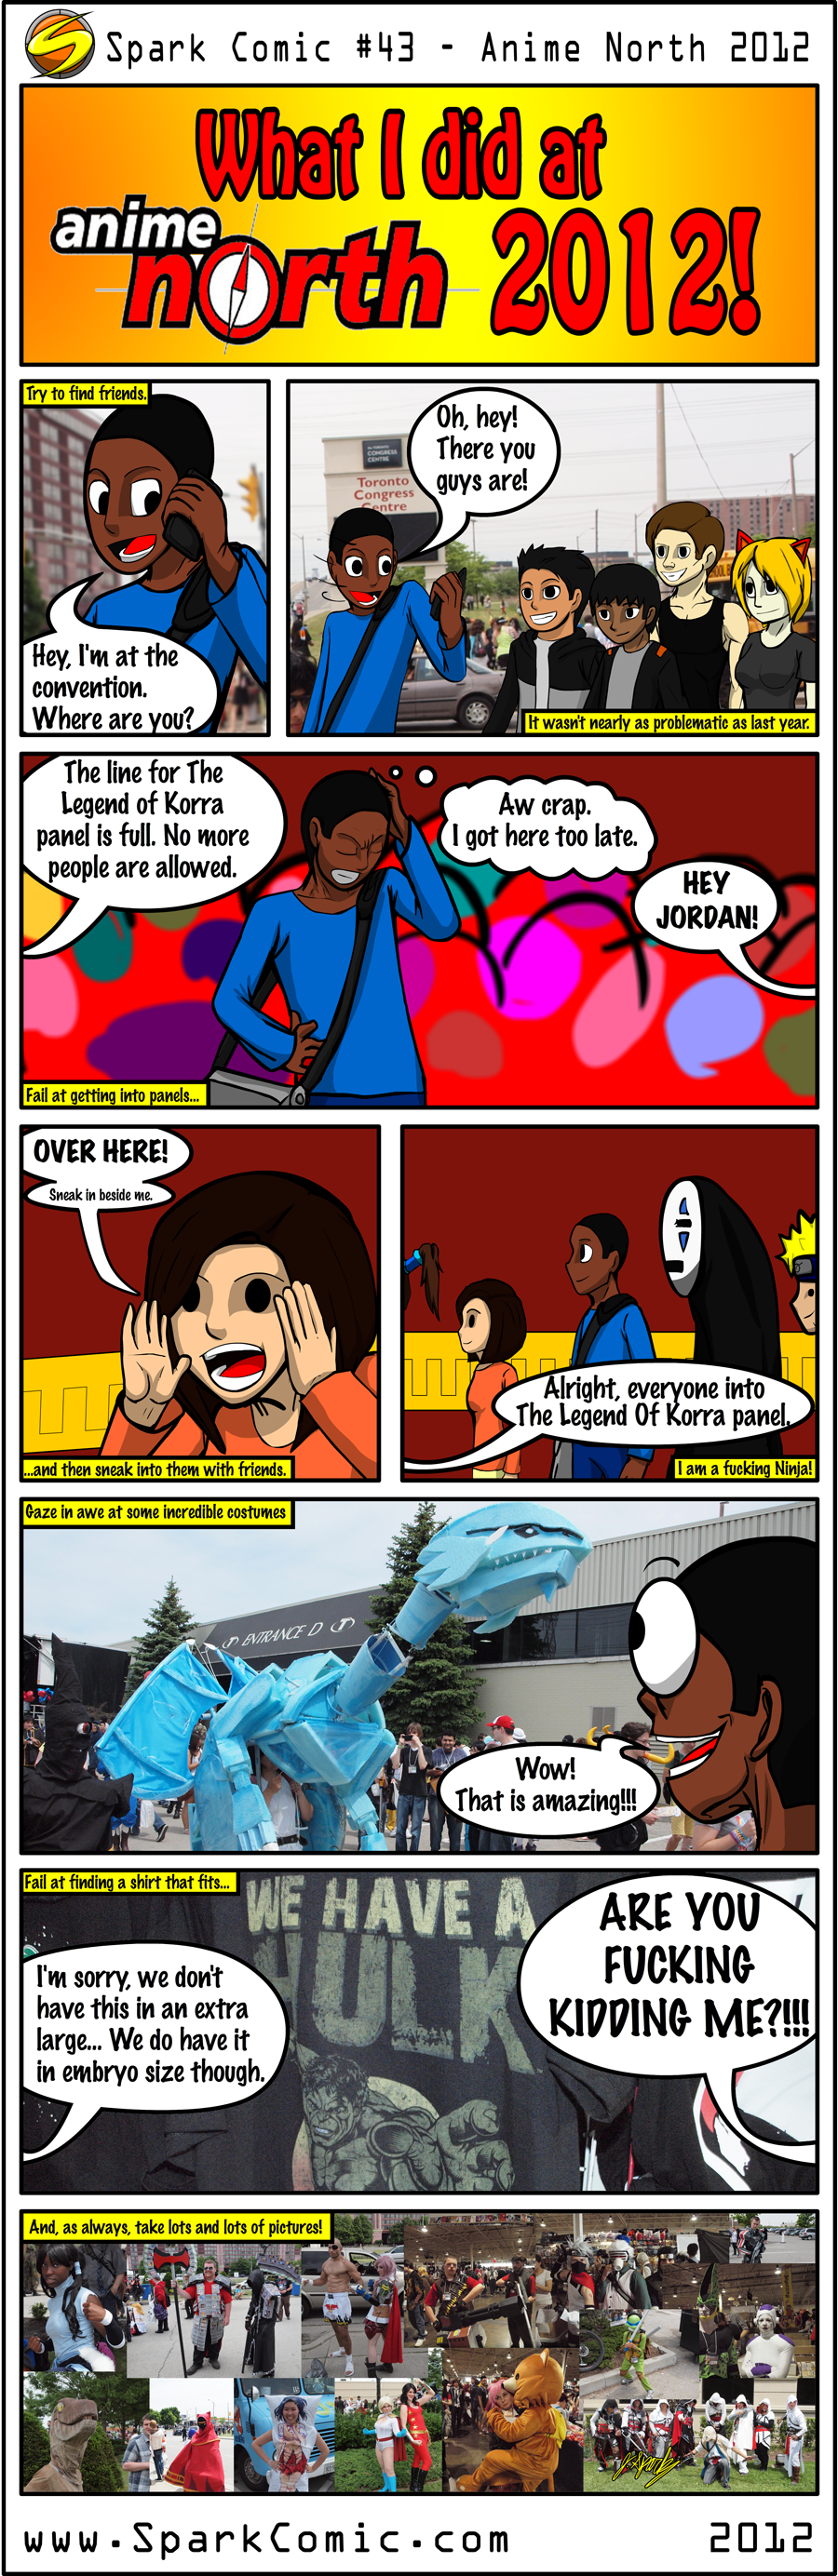 Spark Comic 43